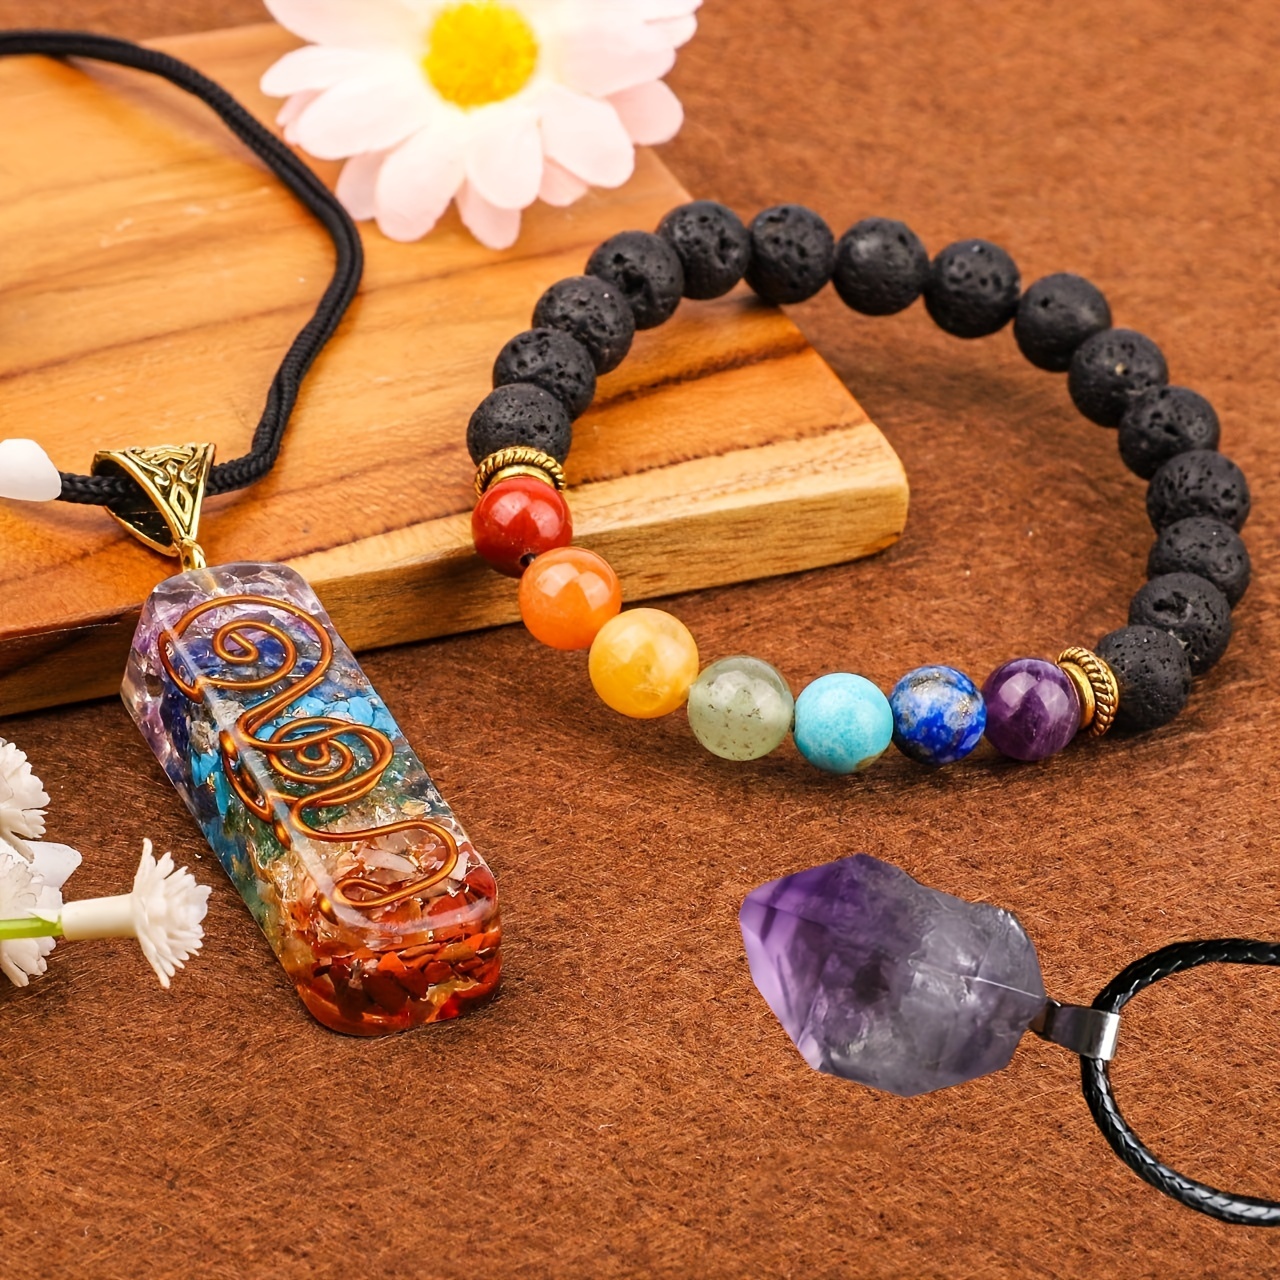 7 Chakra Necklace & Chakra Bracelet - Chakra Jewelry Set For Women